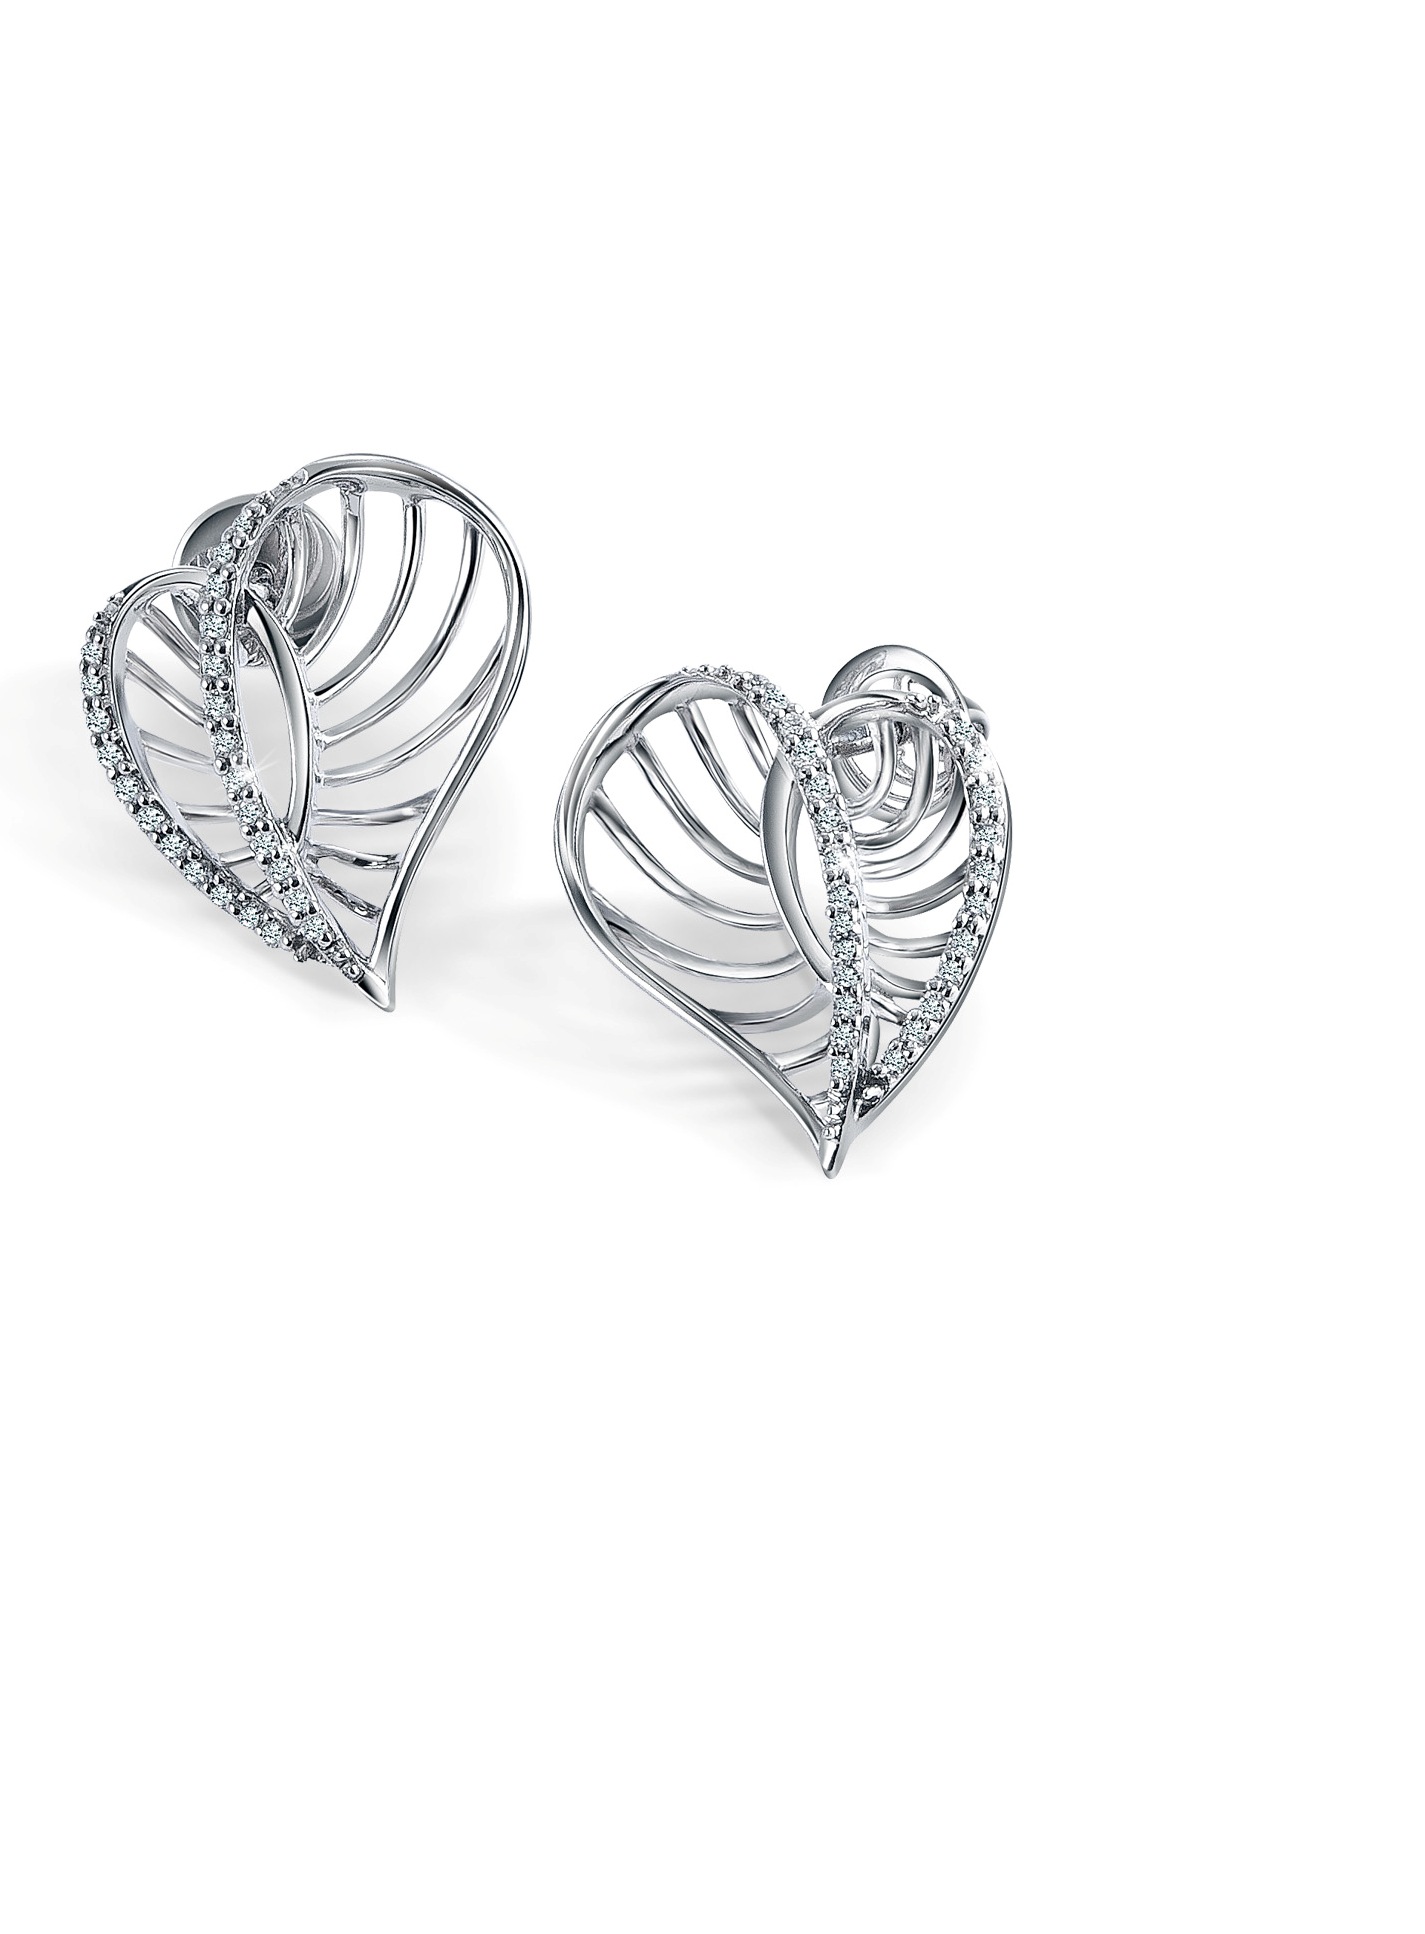 Heart Shaped Platinum Earrings